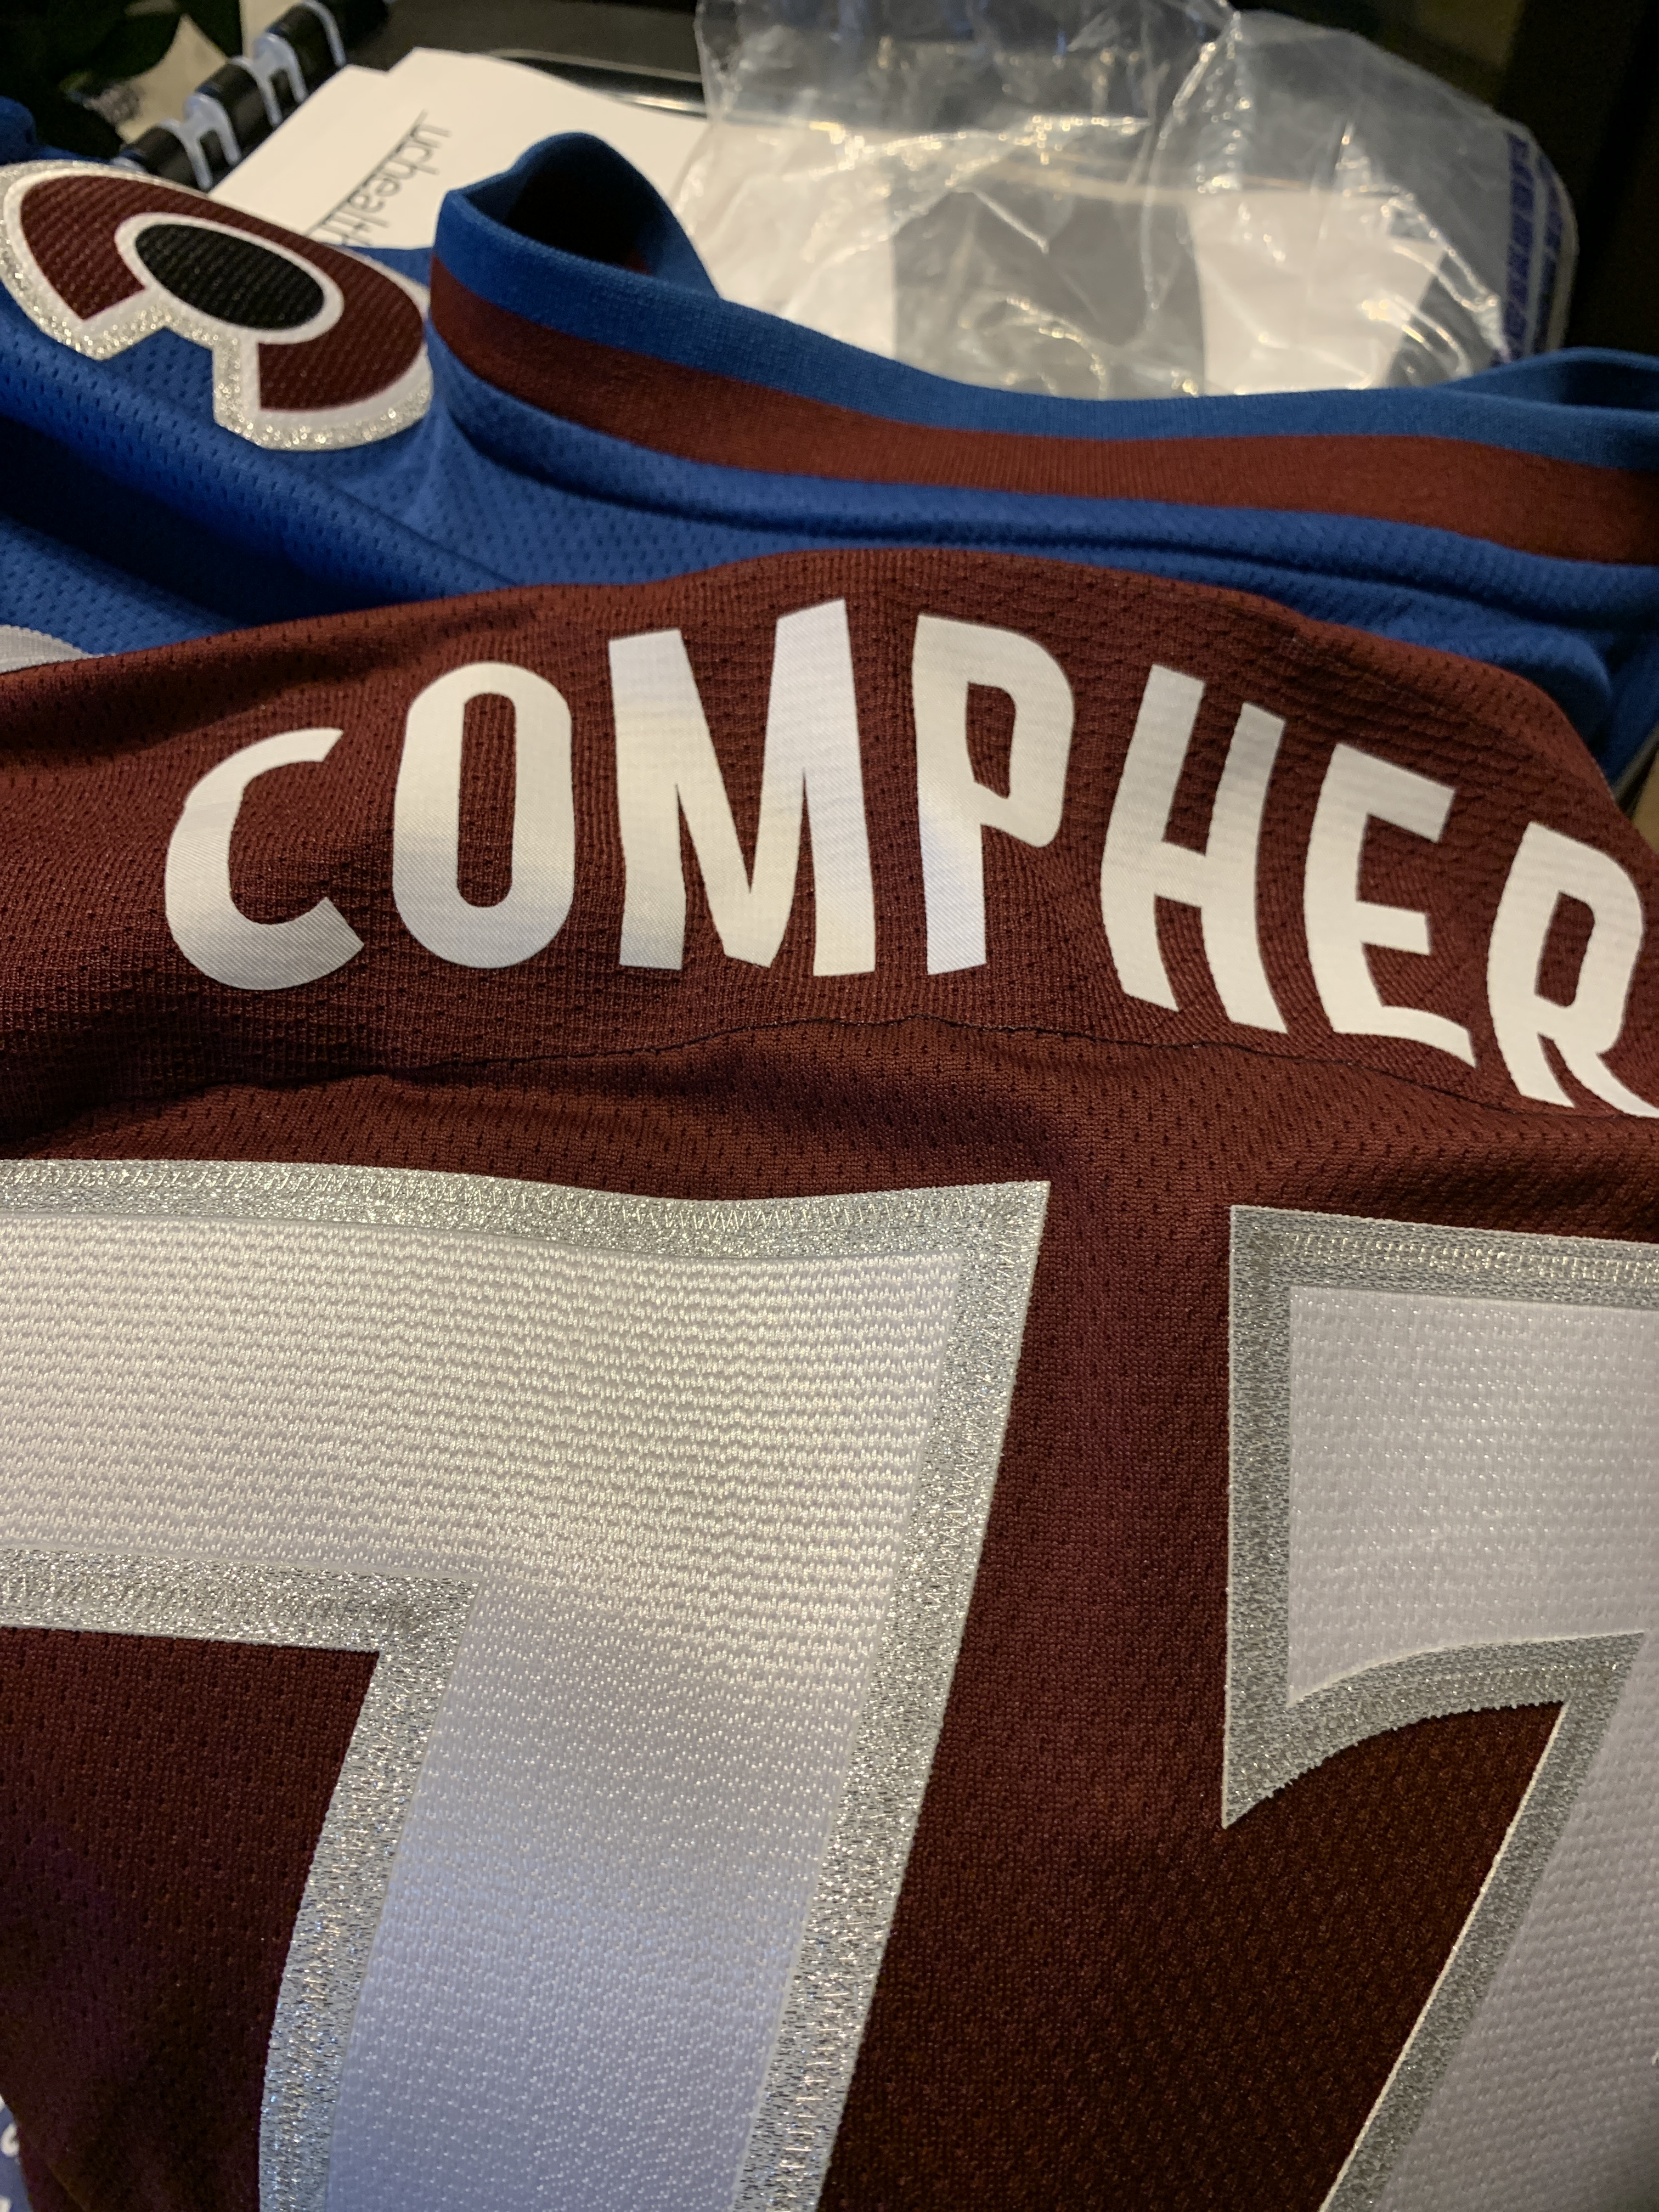 NHL online store accidentally leaks new jerseys —